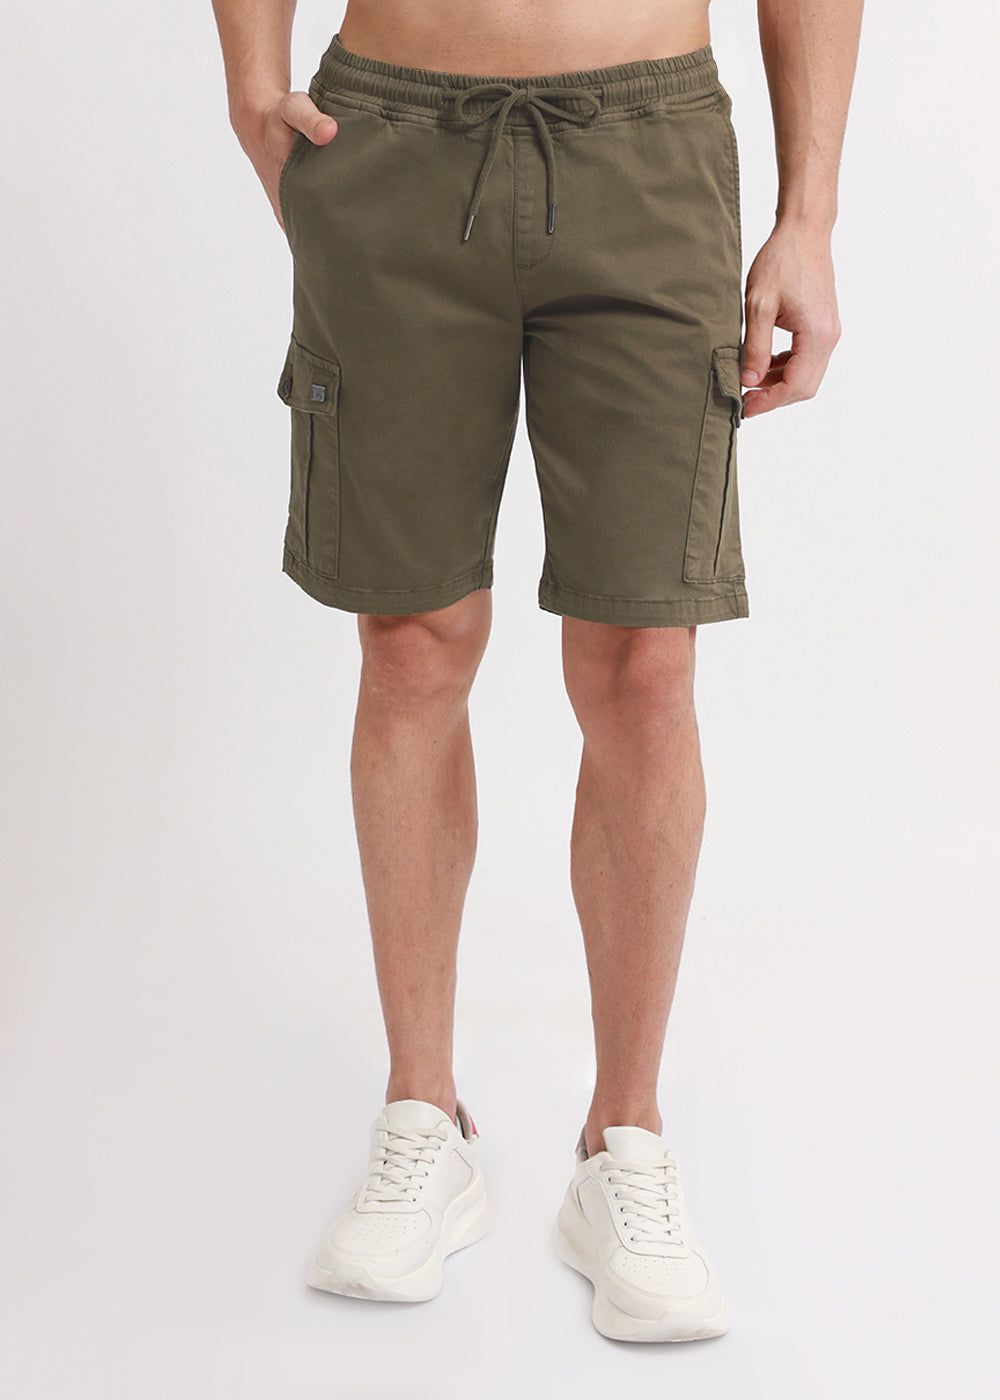 Get Green Cotton Cargo Shorts